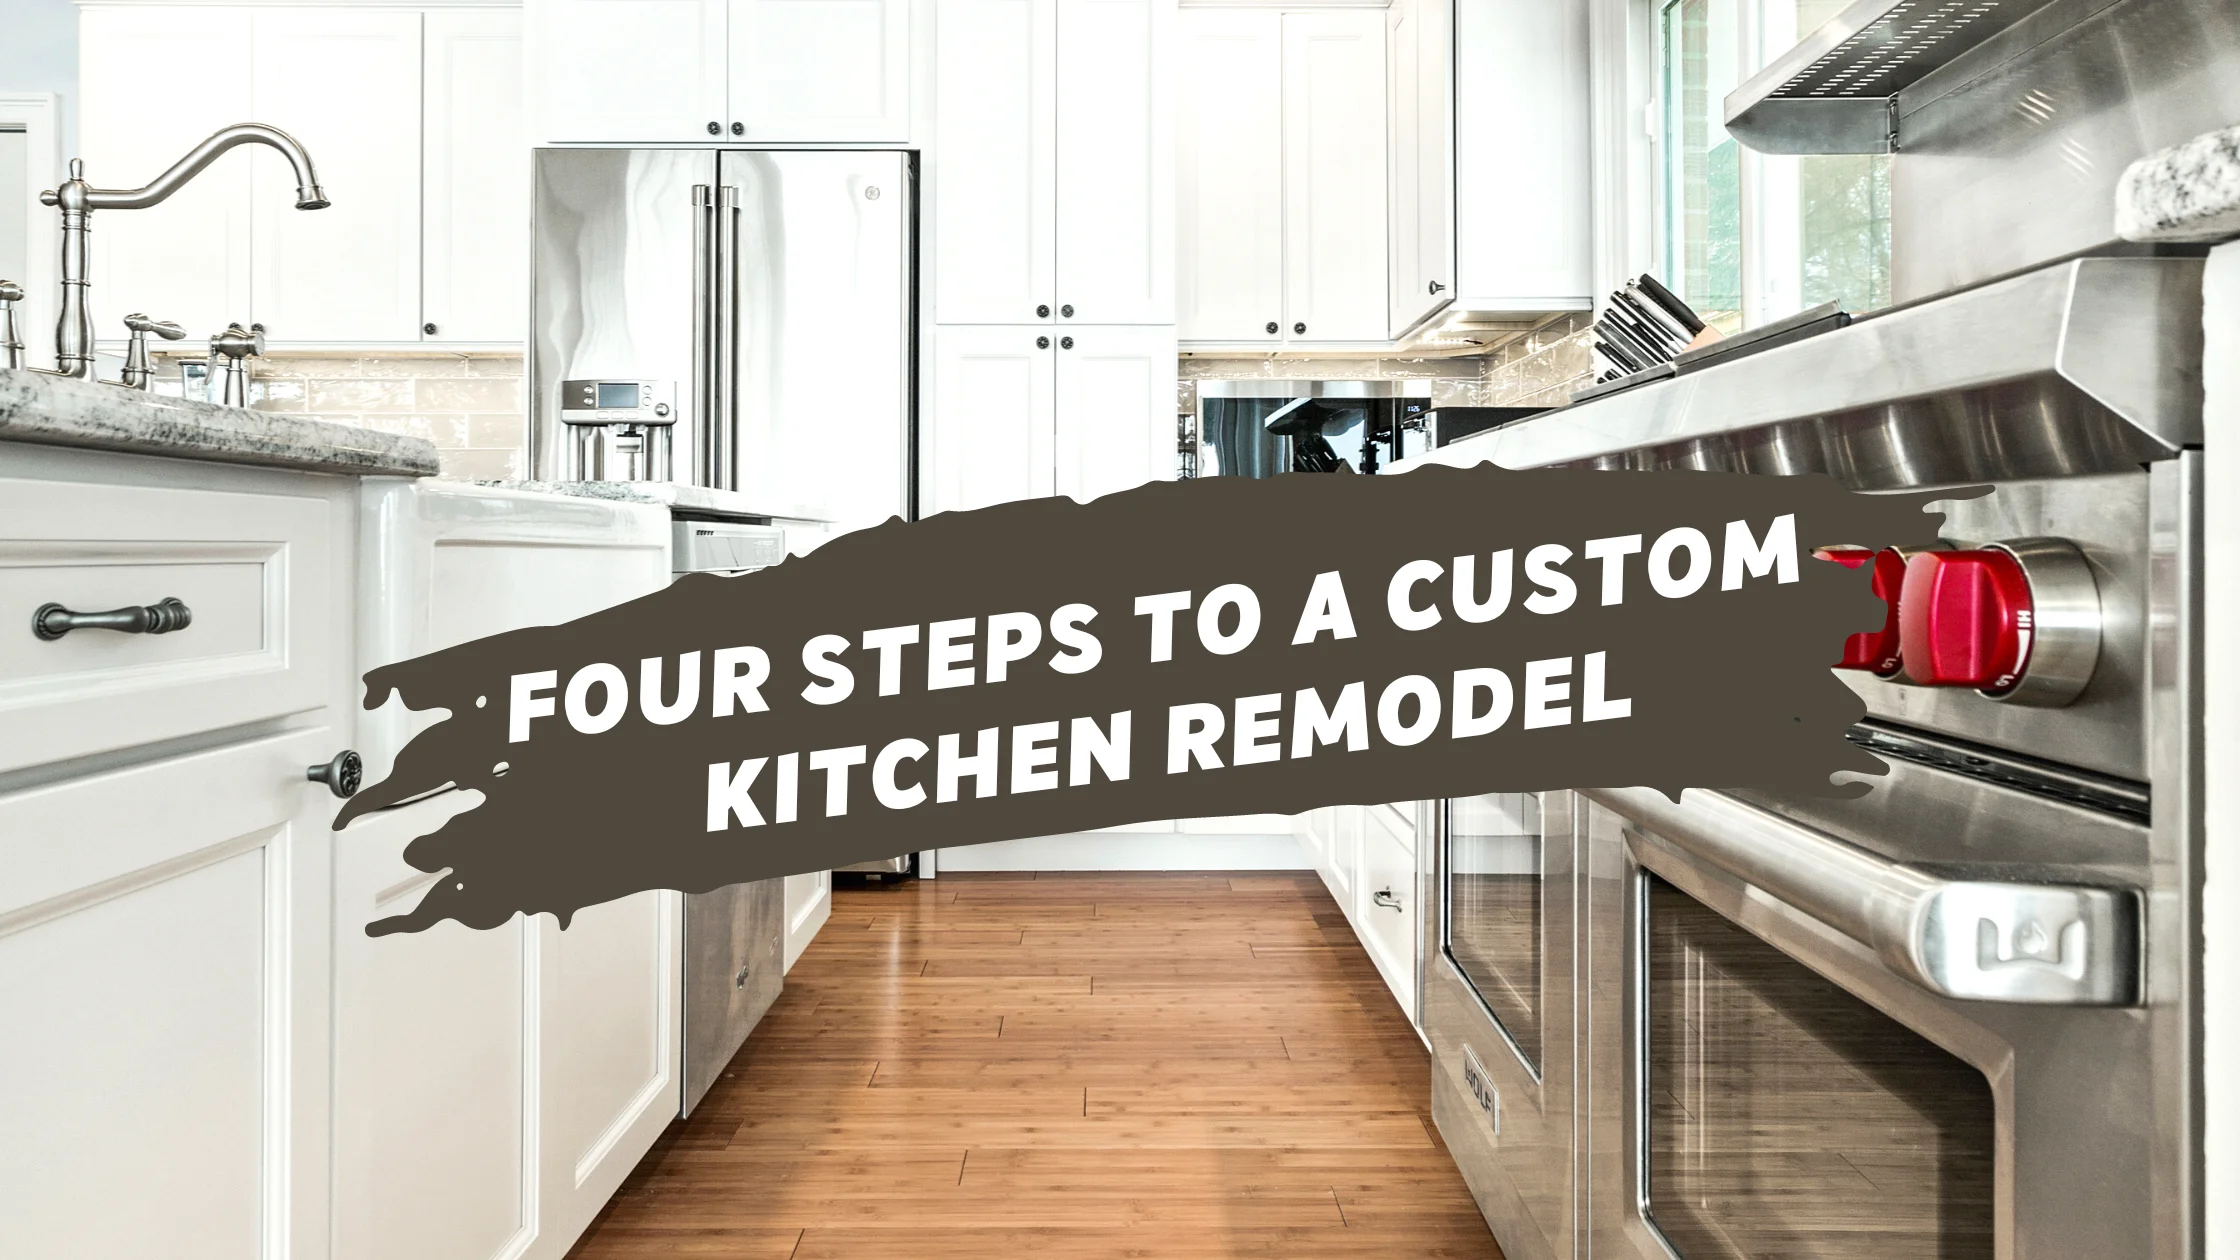 Four steps to a custom kitchen renovation.